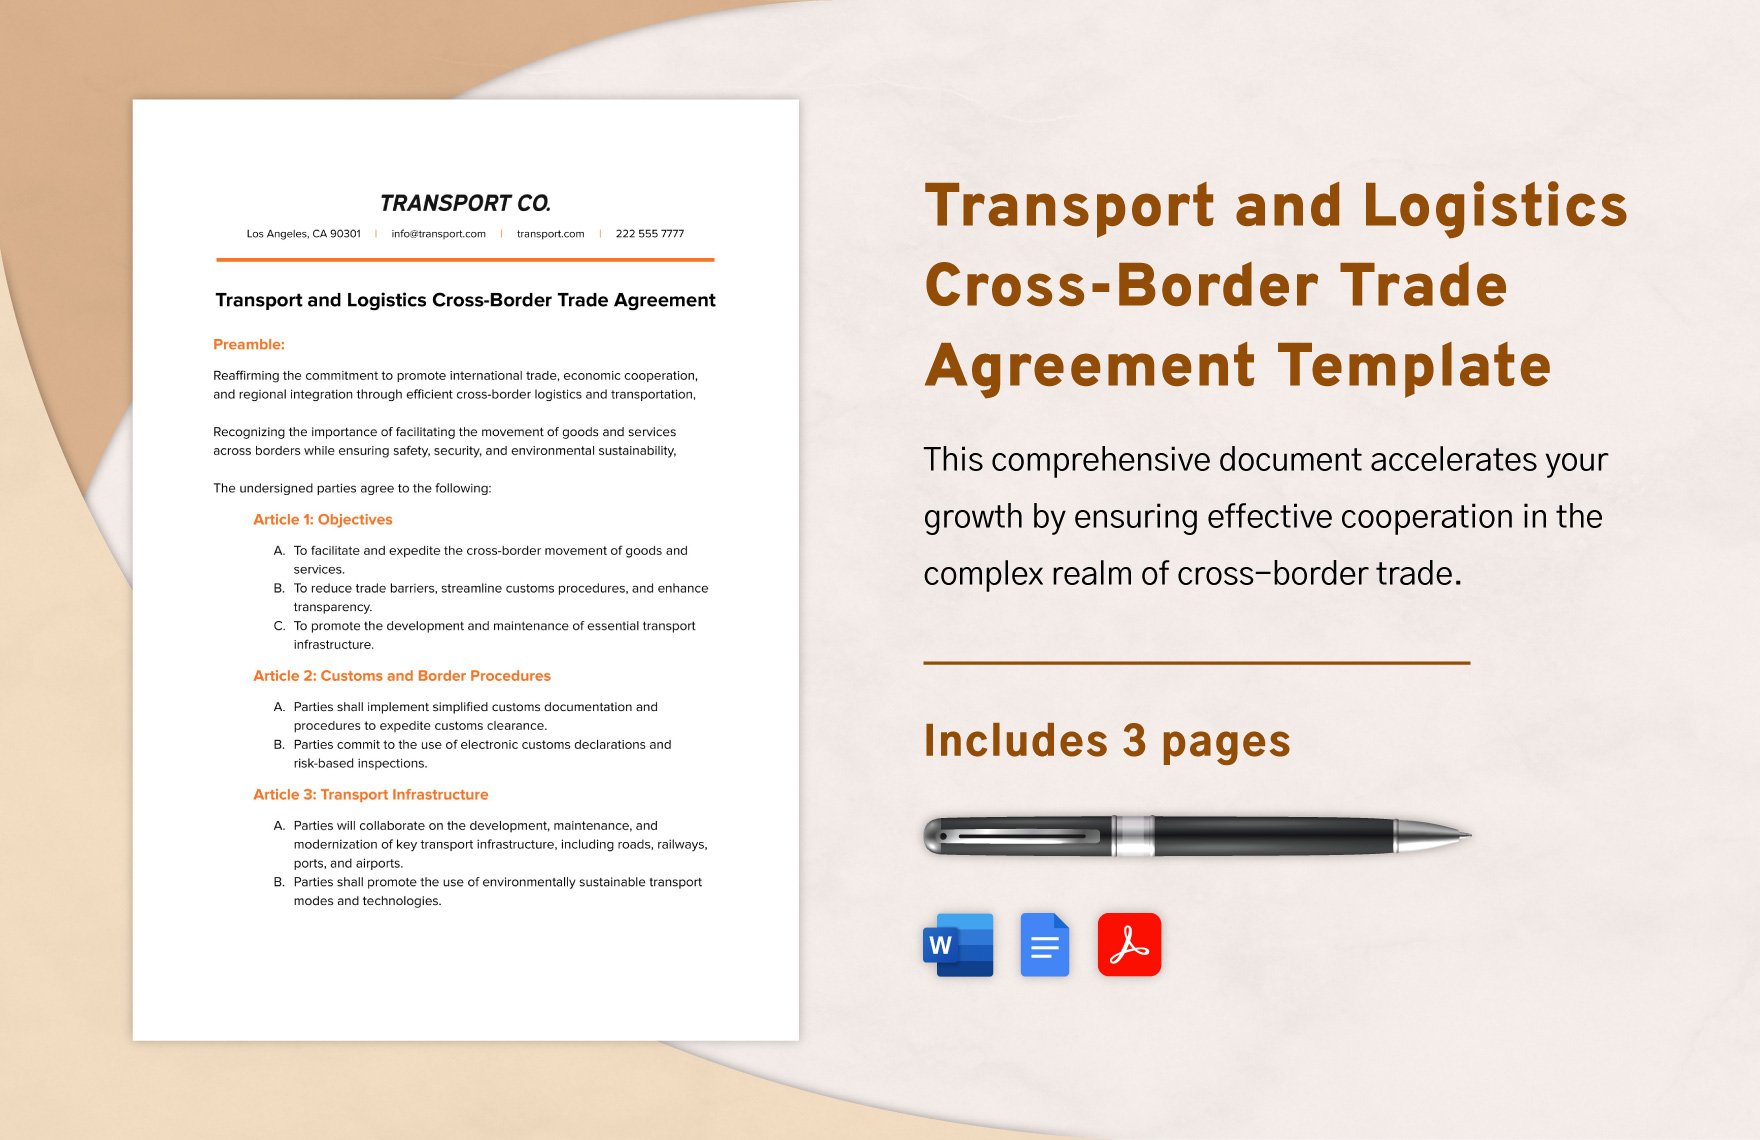 Transport and Logistics Cross-Border Trade Agreement Template